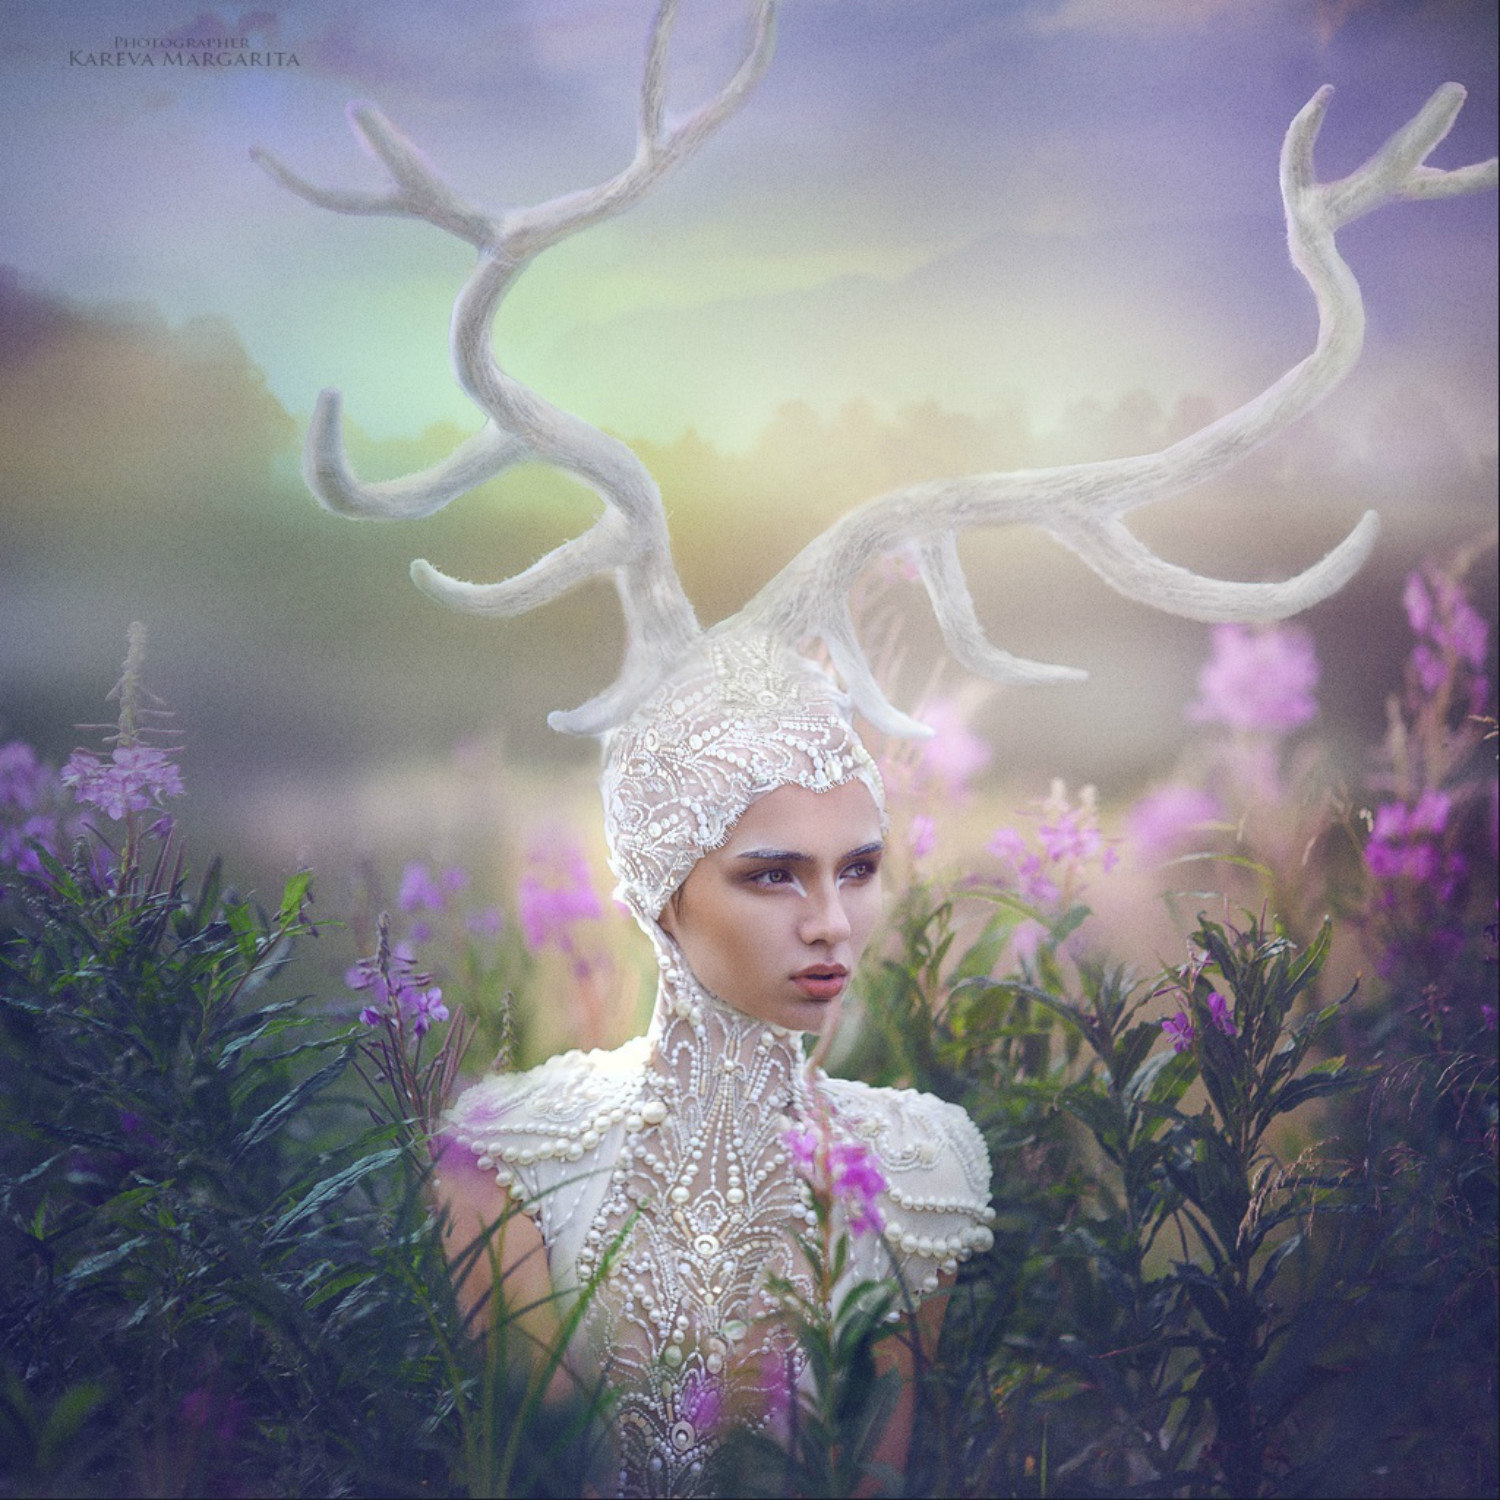 Margarita Kareva photography fairytale magic beauty fashion deer